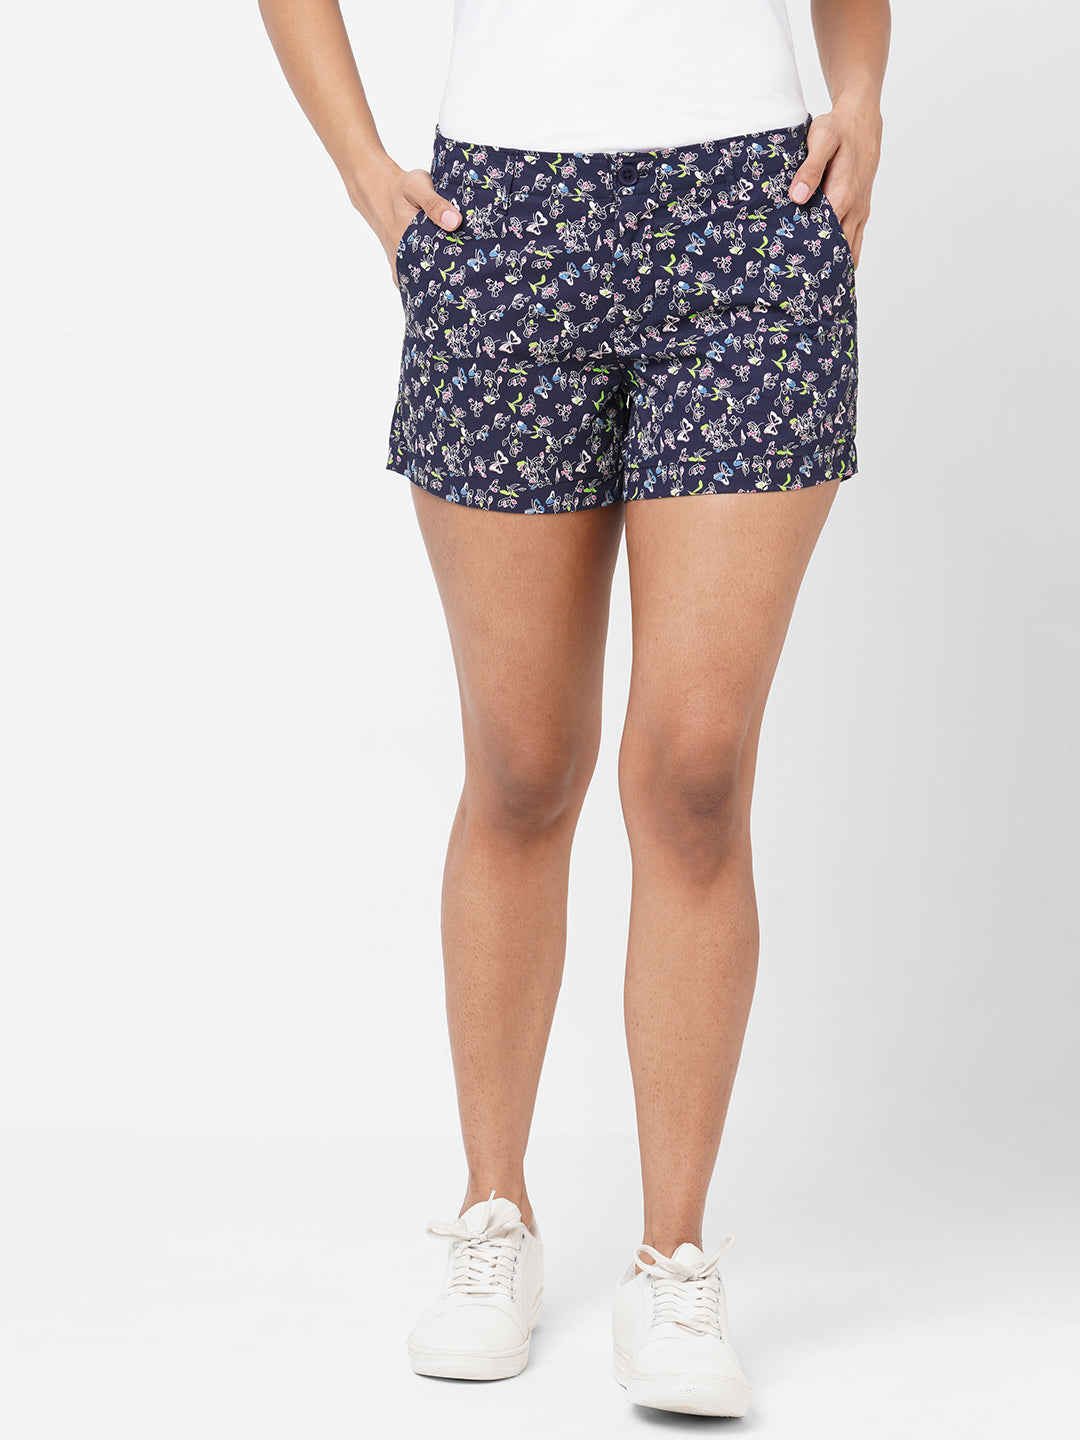 Buy Womens Cotton Lycra Casual Wear Regular Fit Shorts